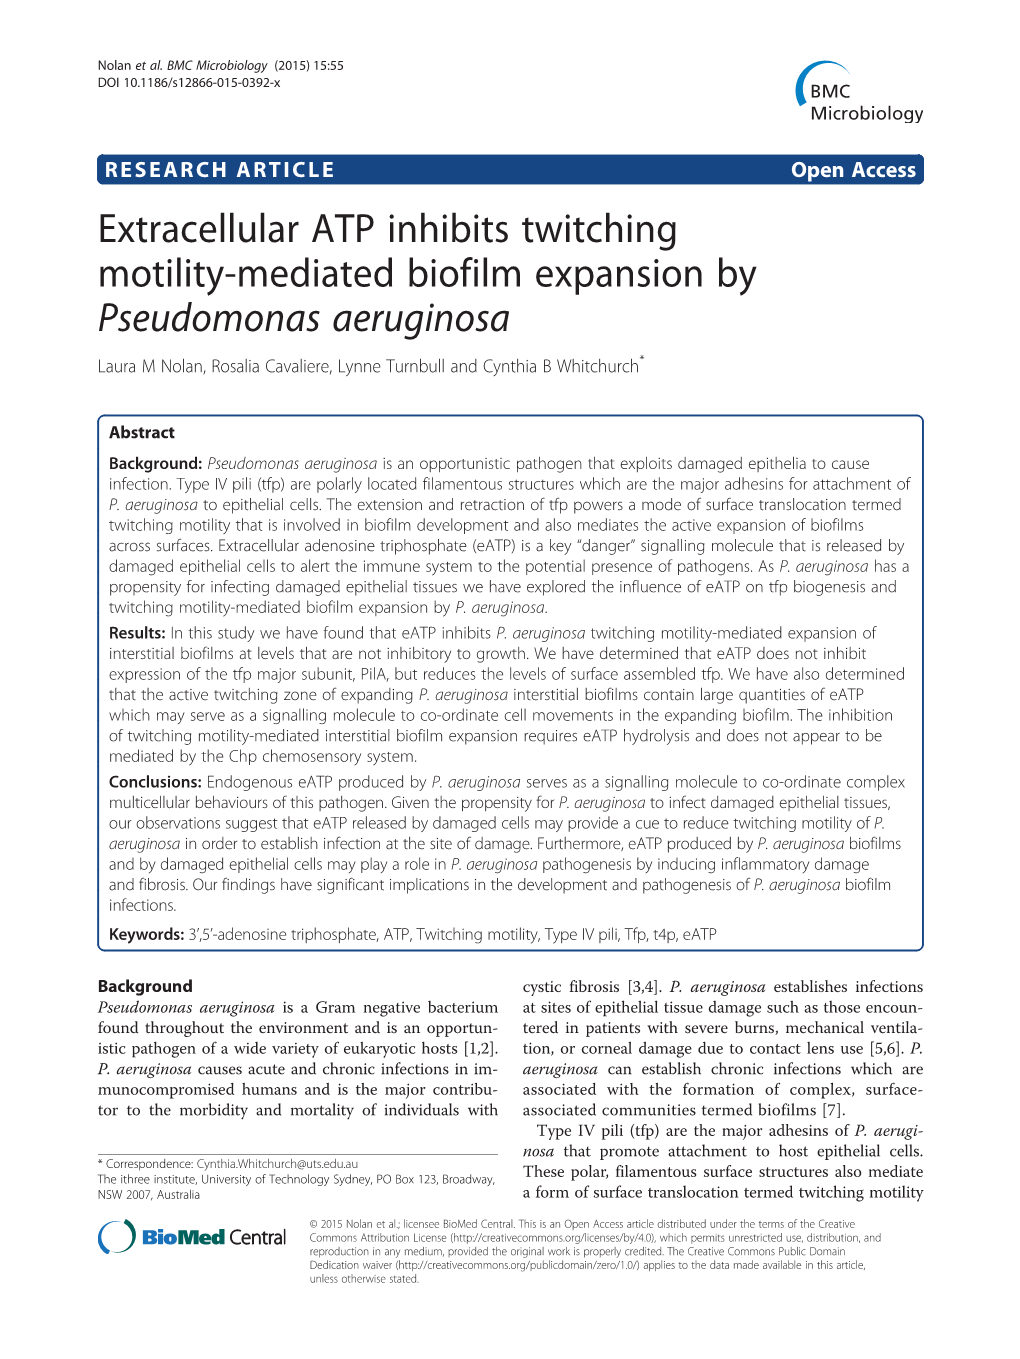 Extracellular ATP Inhibits Twitching Motility-Mediated Biofilm Expansion by Pseudomonas Aeruginosa